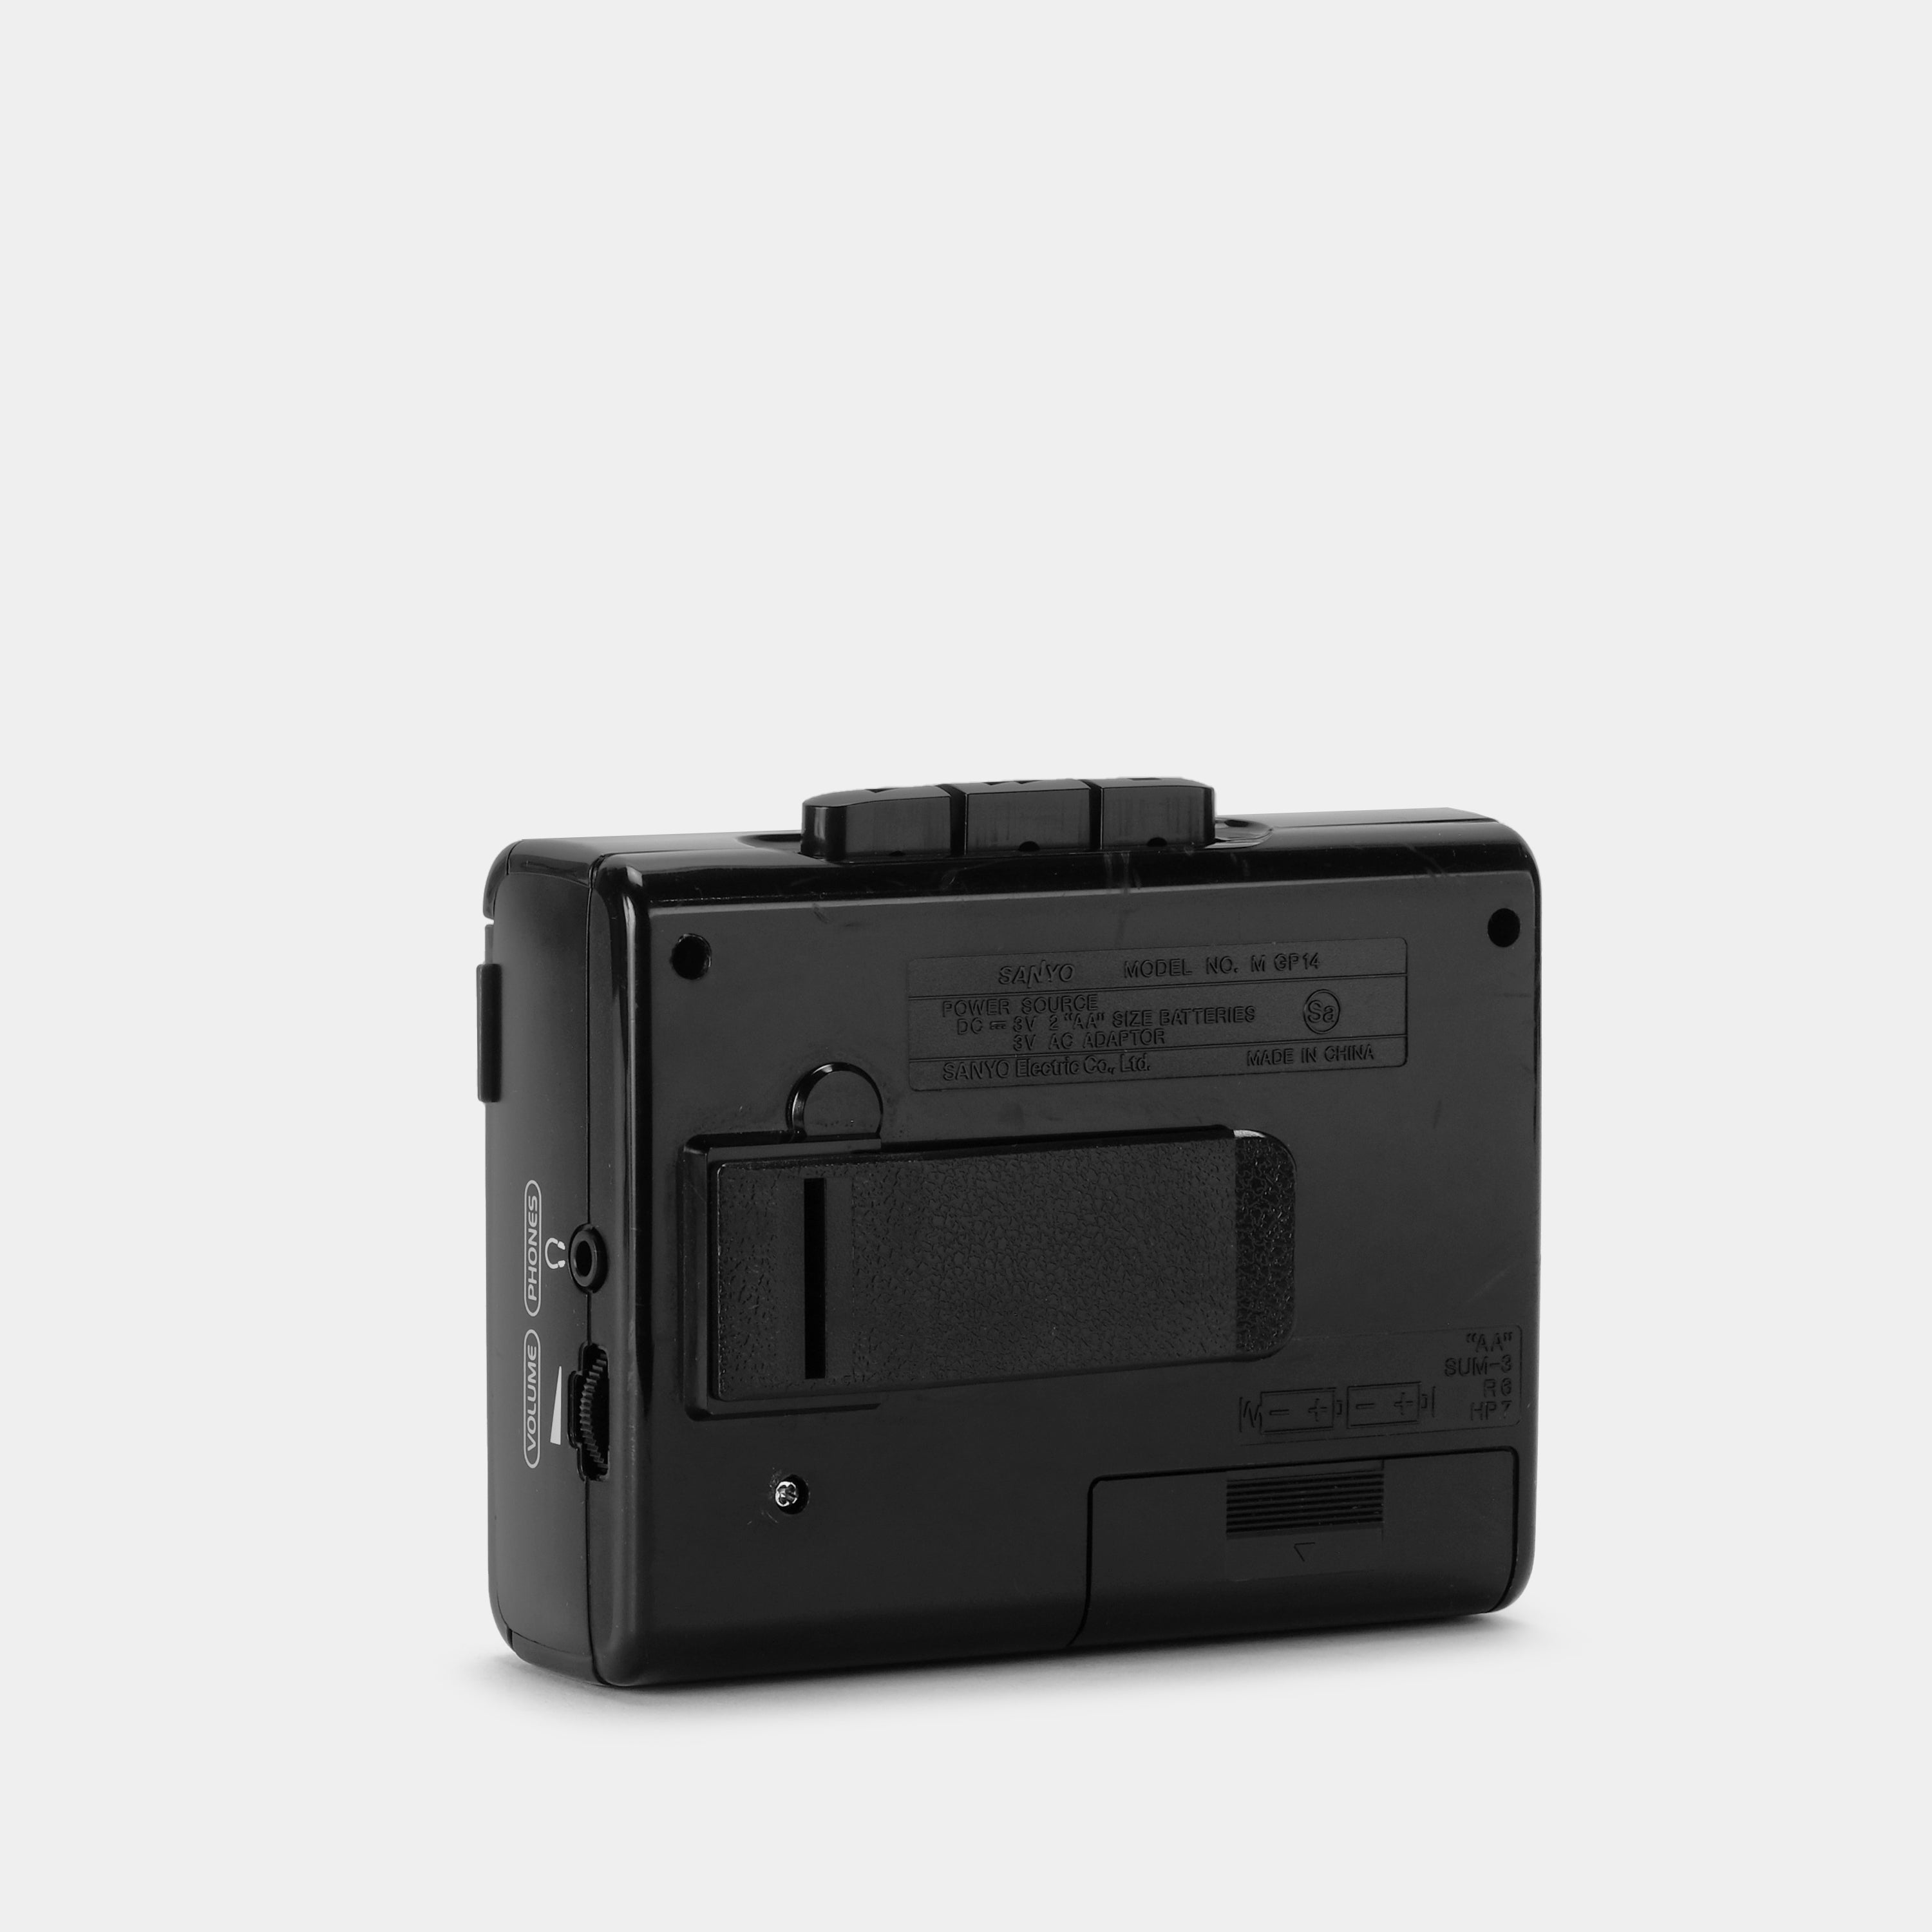 Sanyo MGP14 Portable Cassette Player